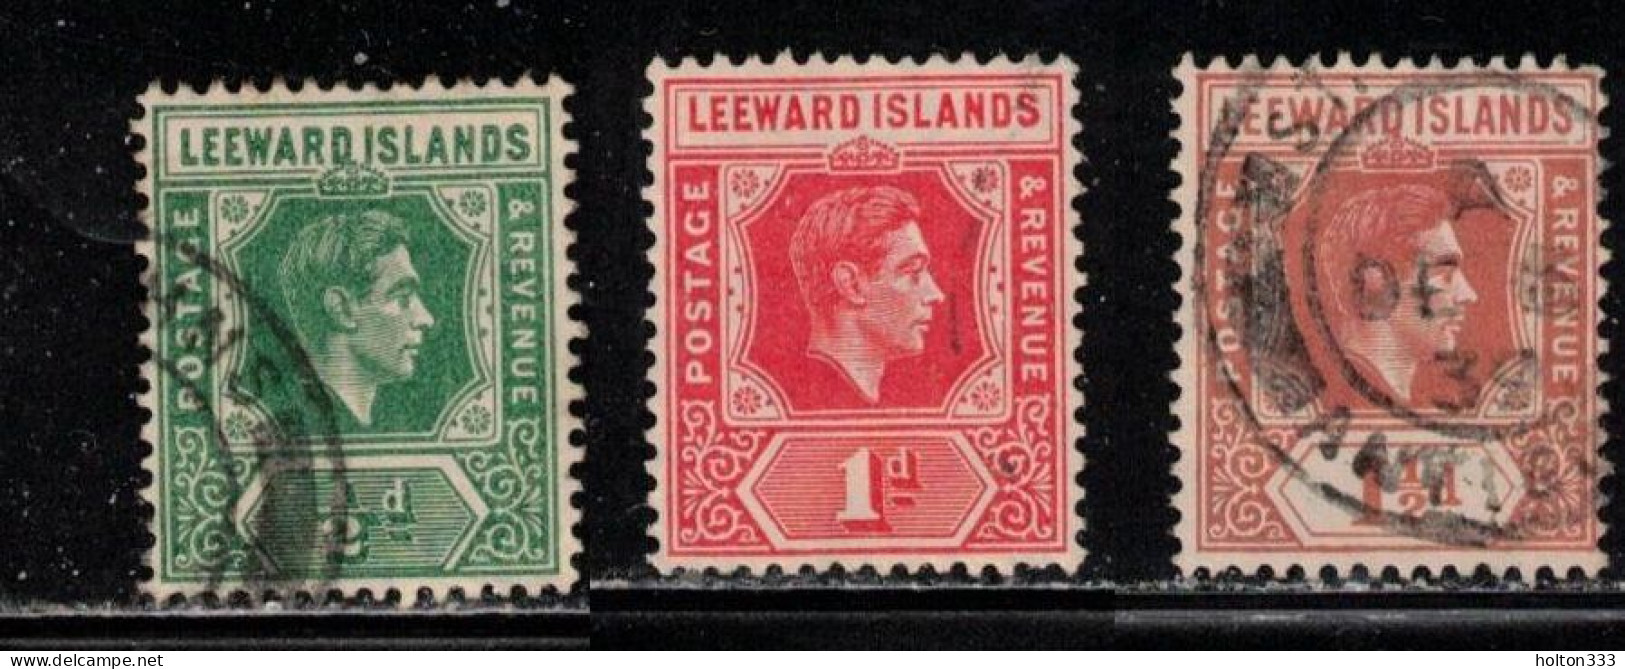 LEEWARD ISLANDS Scott # 104-6 Used - KGVI - Leeward  Islands